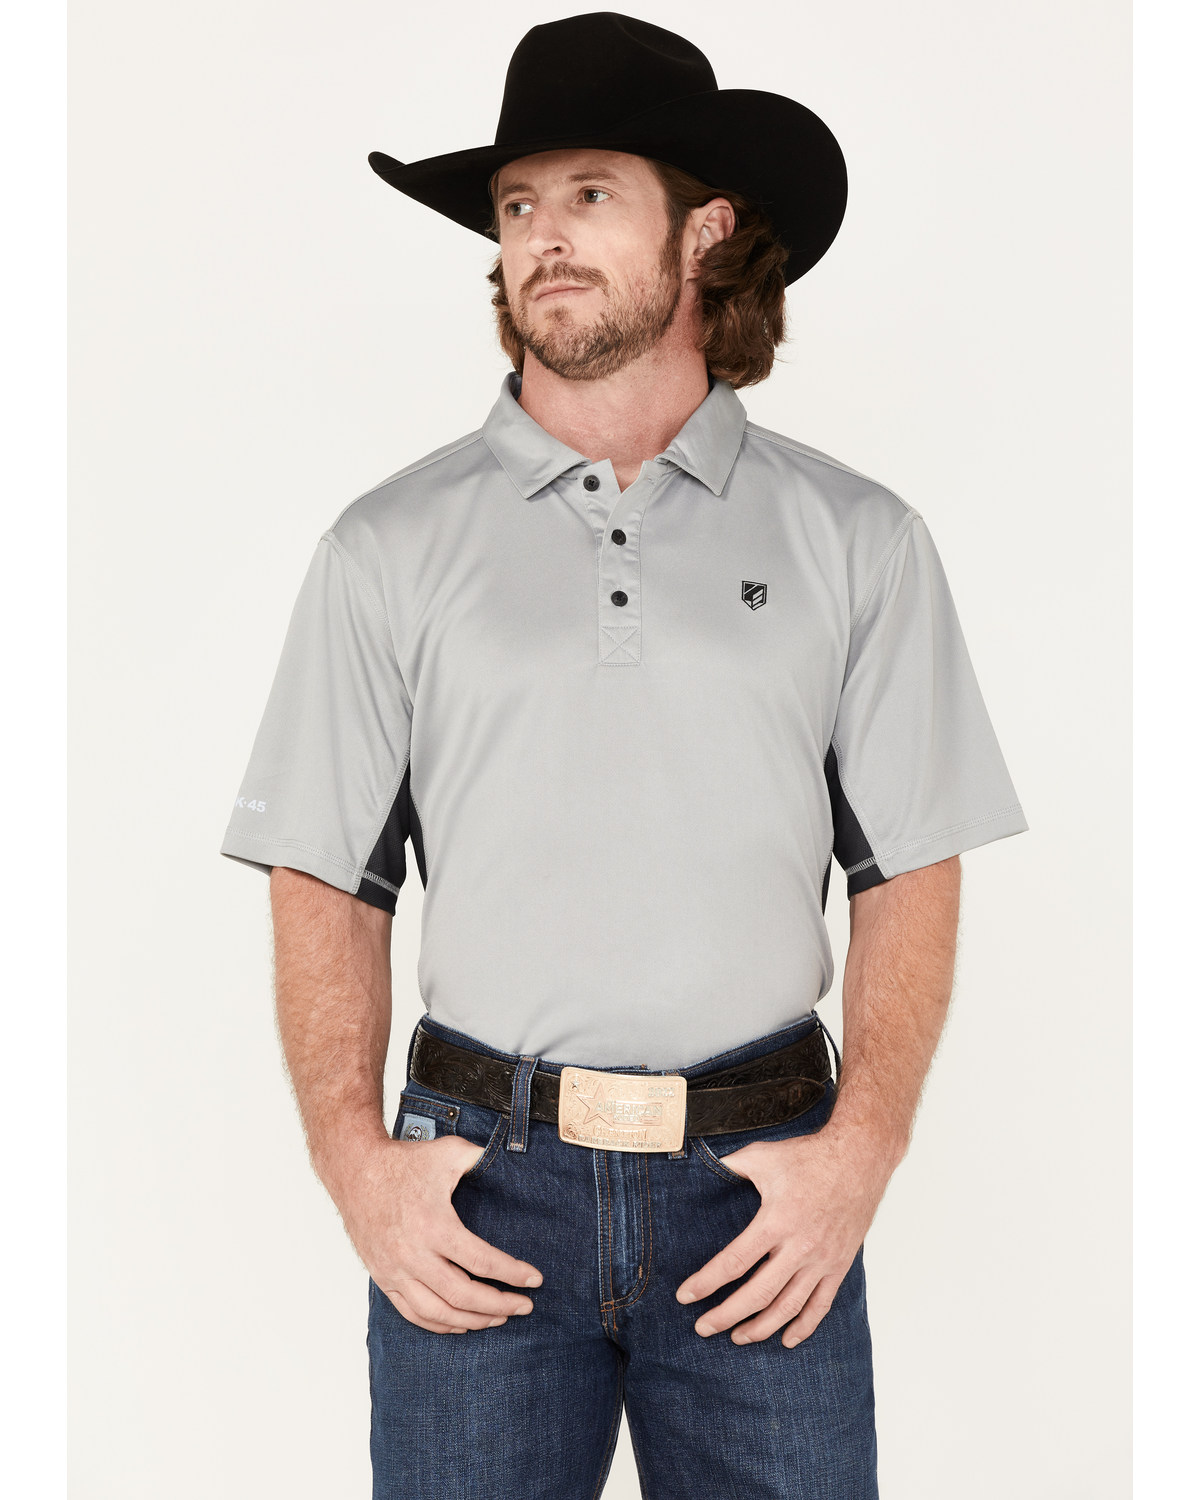 RANK 45® Men's Solid Renegade Performance Short Sleeve Polo Shirt